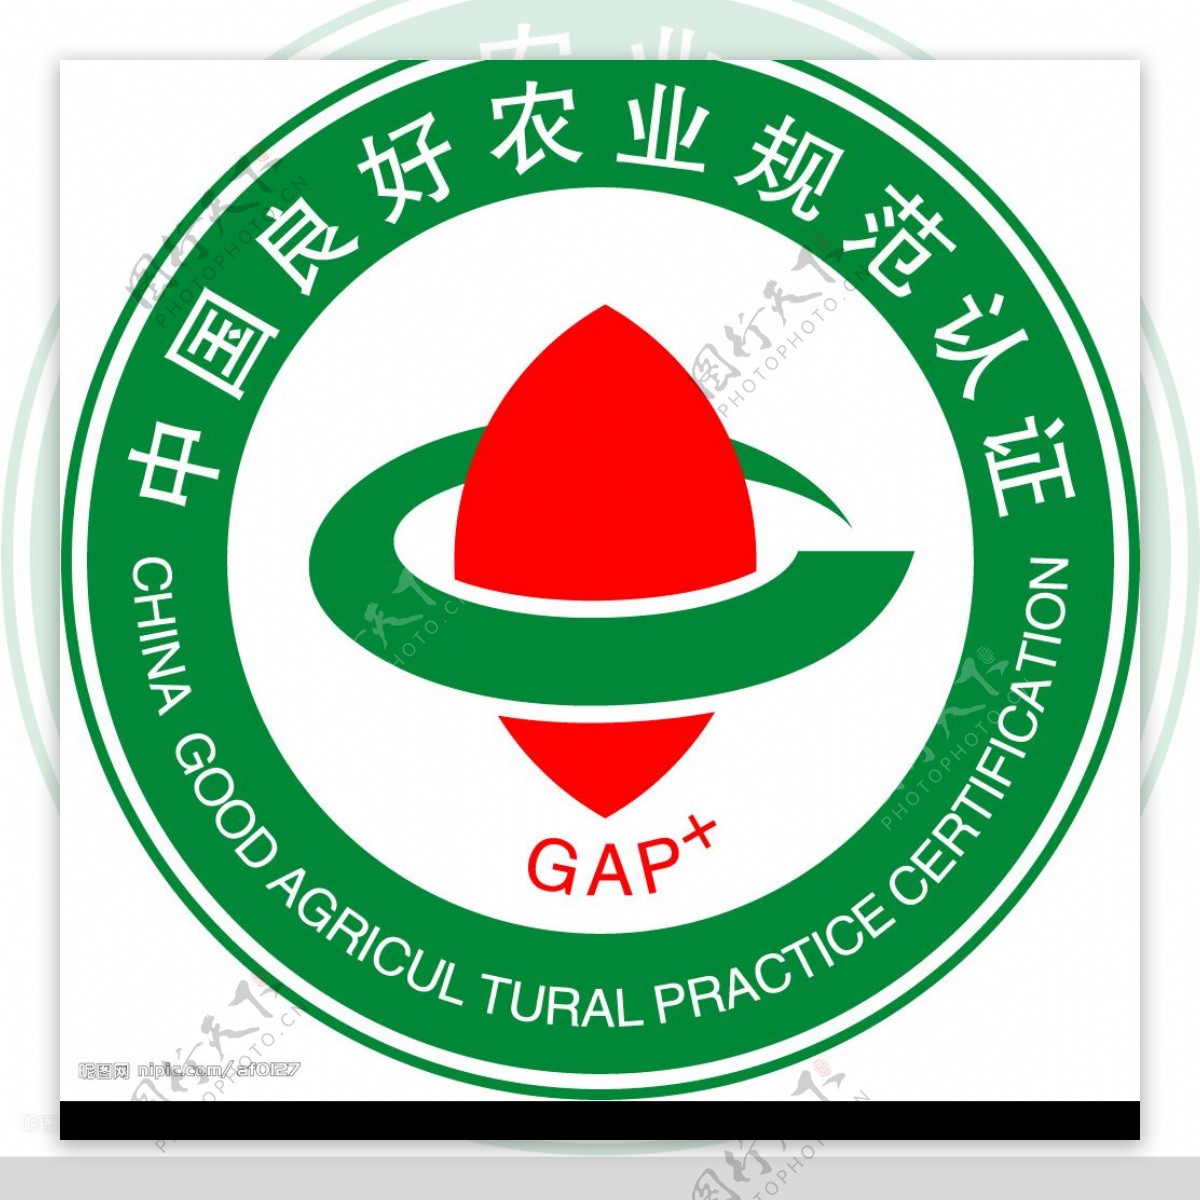 GAP认证标志图片